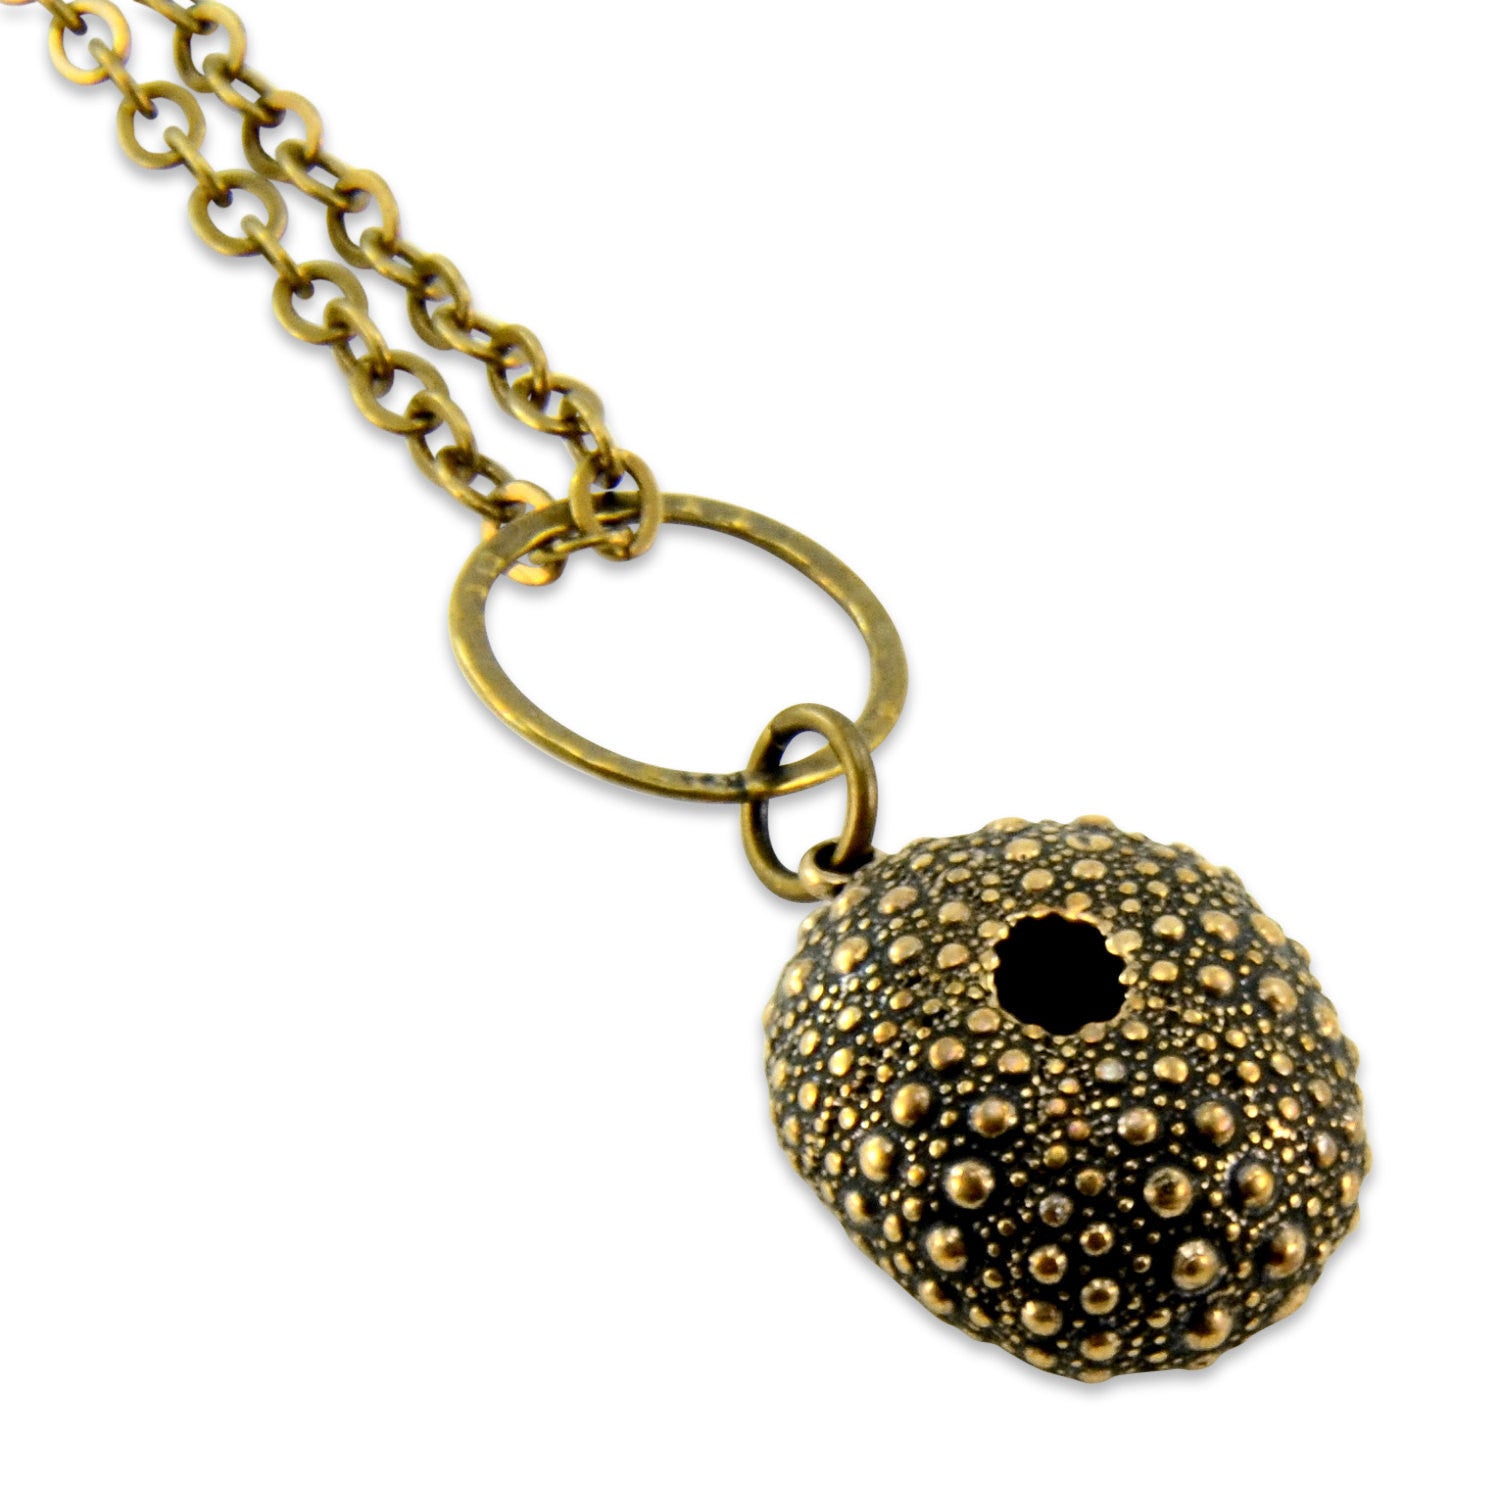 Sea Urchin Necklace - Gwen Delicious Jewelry Designs